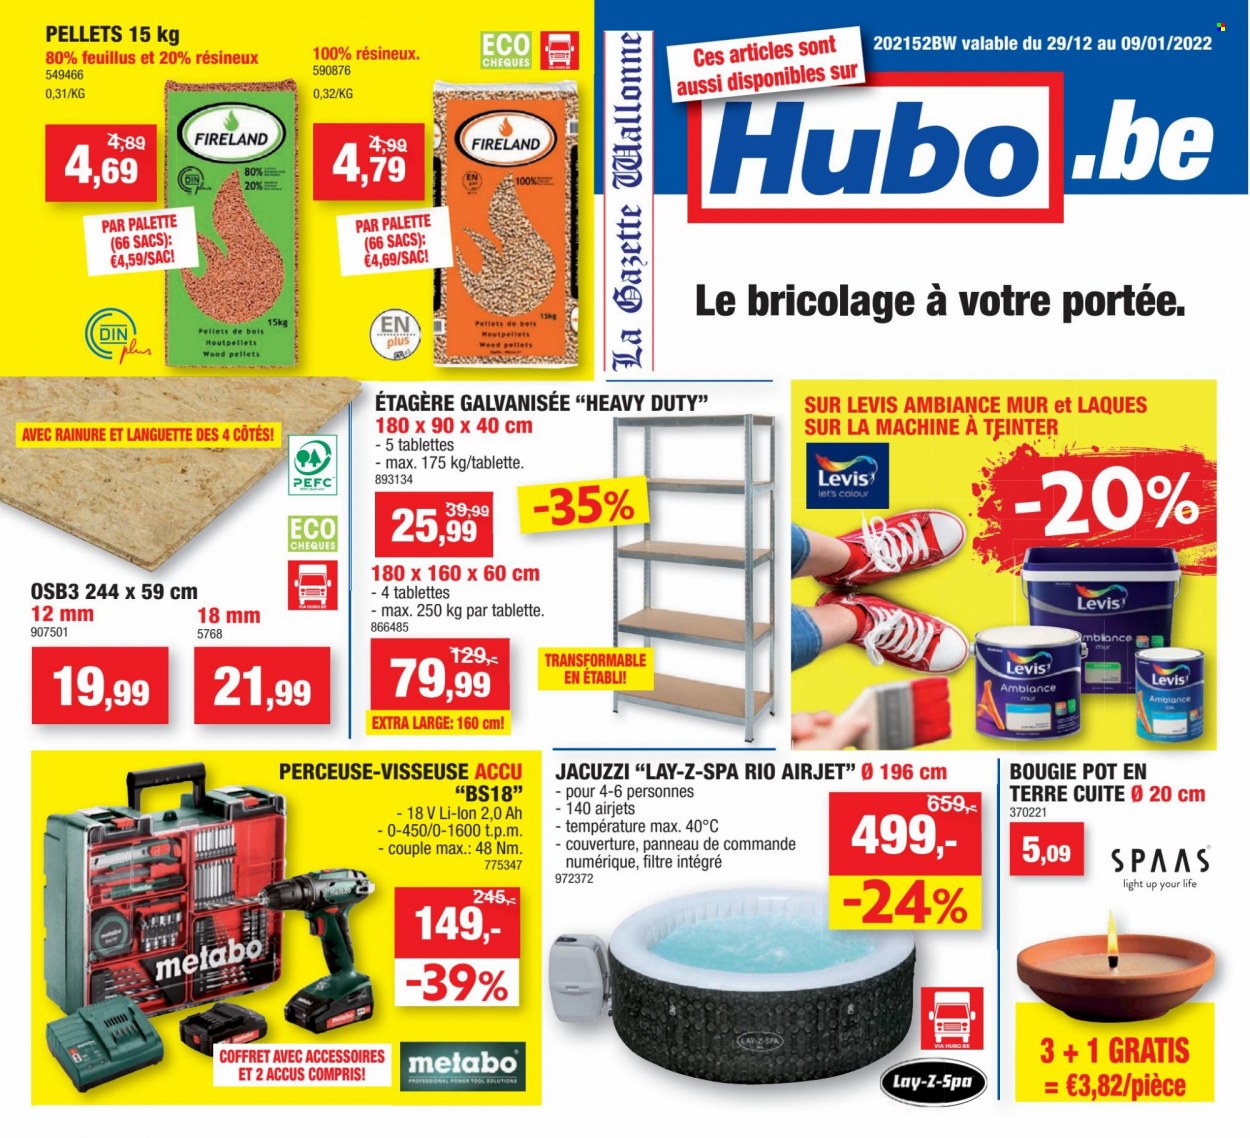 thumbnail - Hubo-aanbieding - 29/12/2021 - 09/01/2022 -  producten in de aanbieding - Metabo, Jacuzzi. Pagina 1.